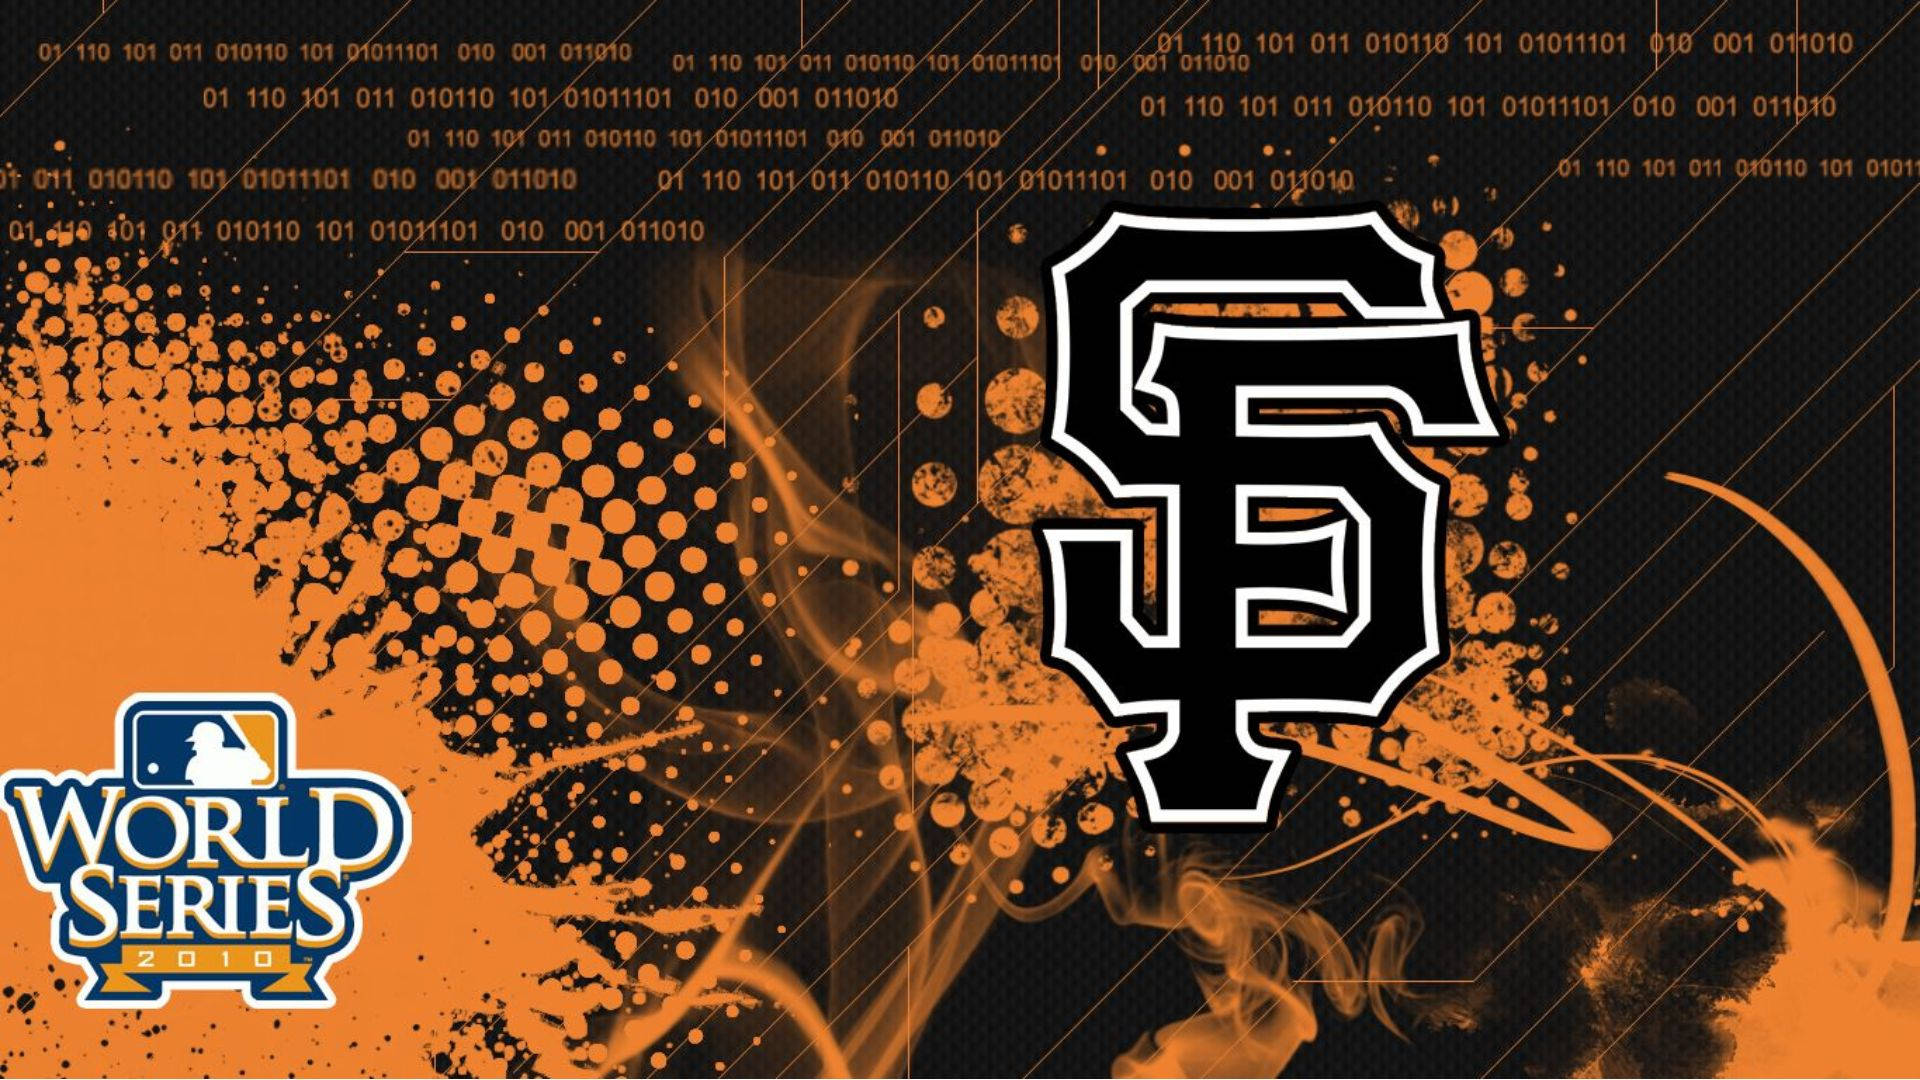 San Francisco Giants World Series 2010 Background